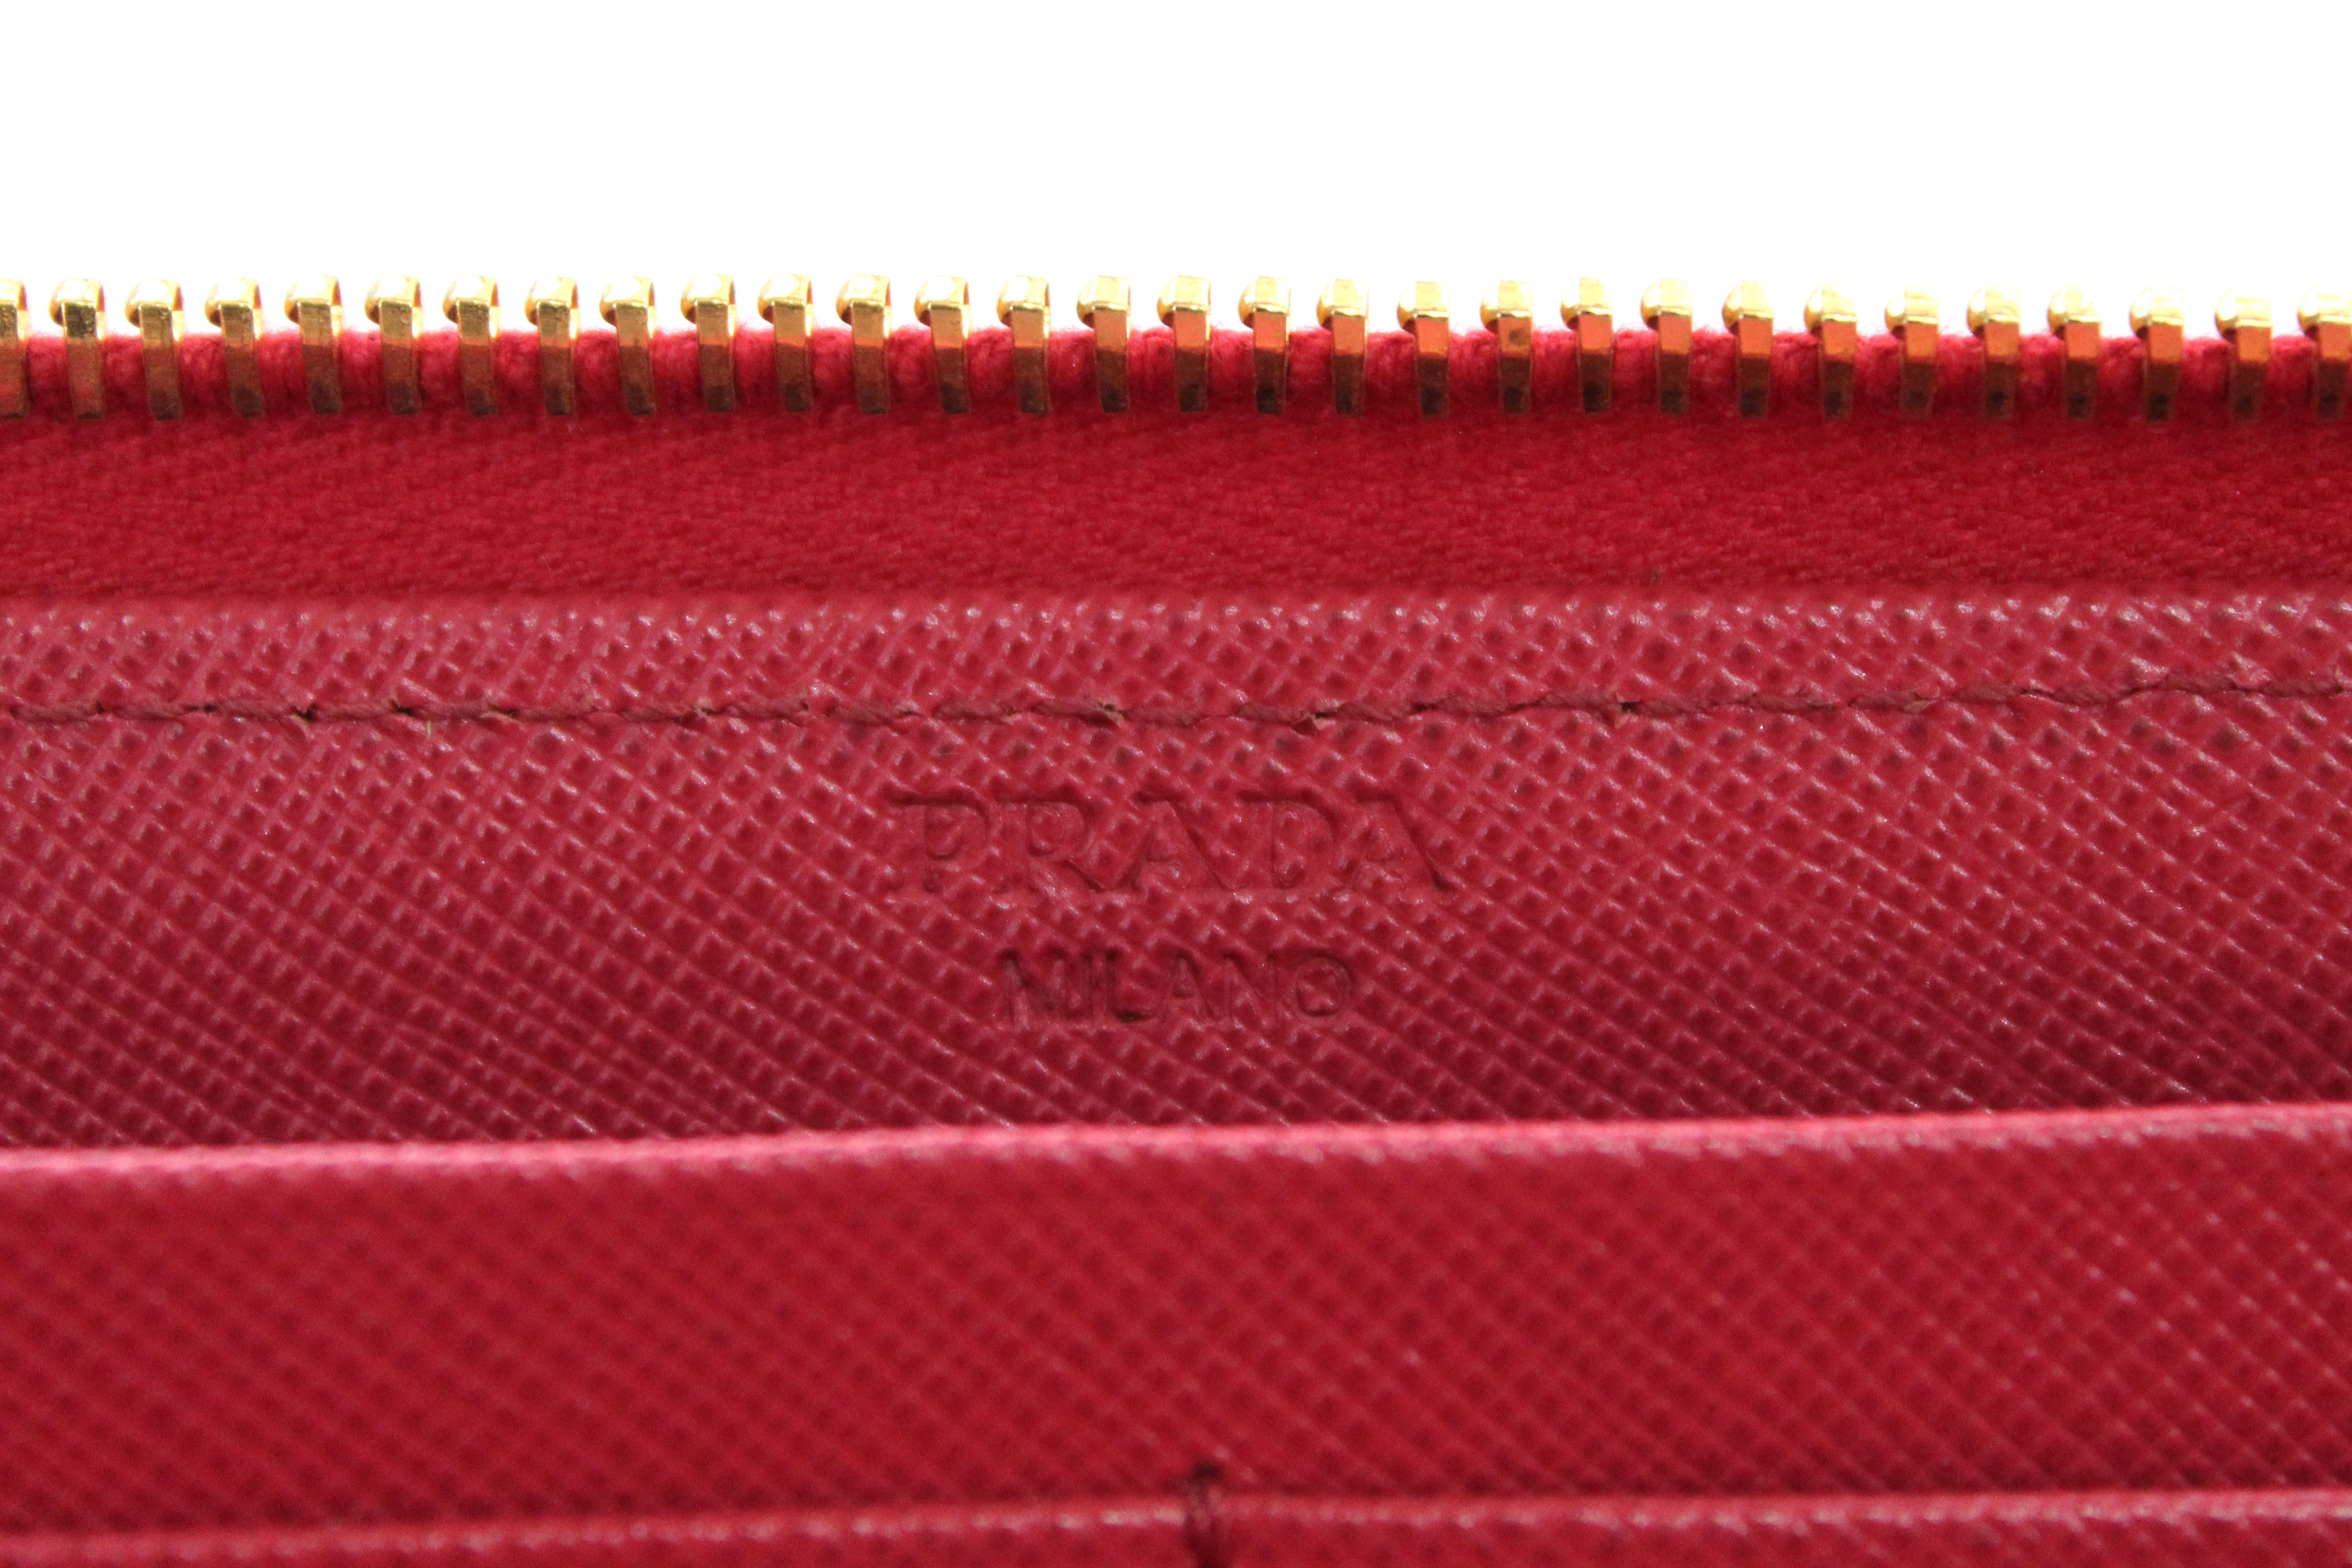 Authentic Prada Pink Saffiano Leather Zipper Wallet